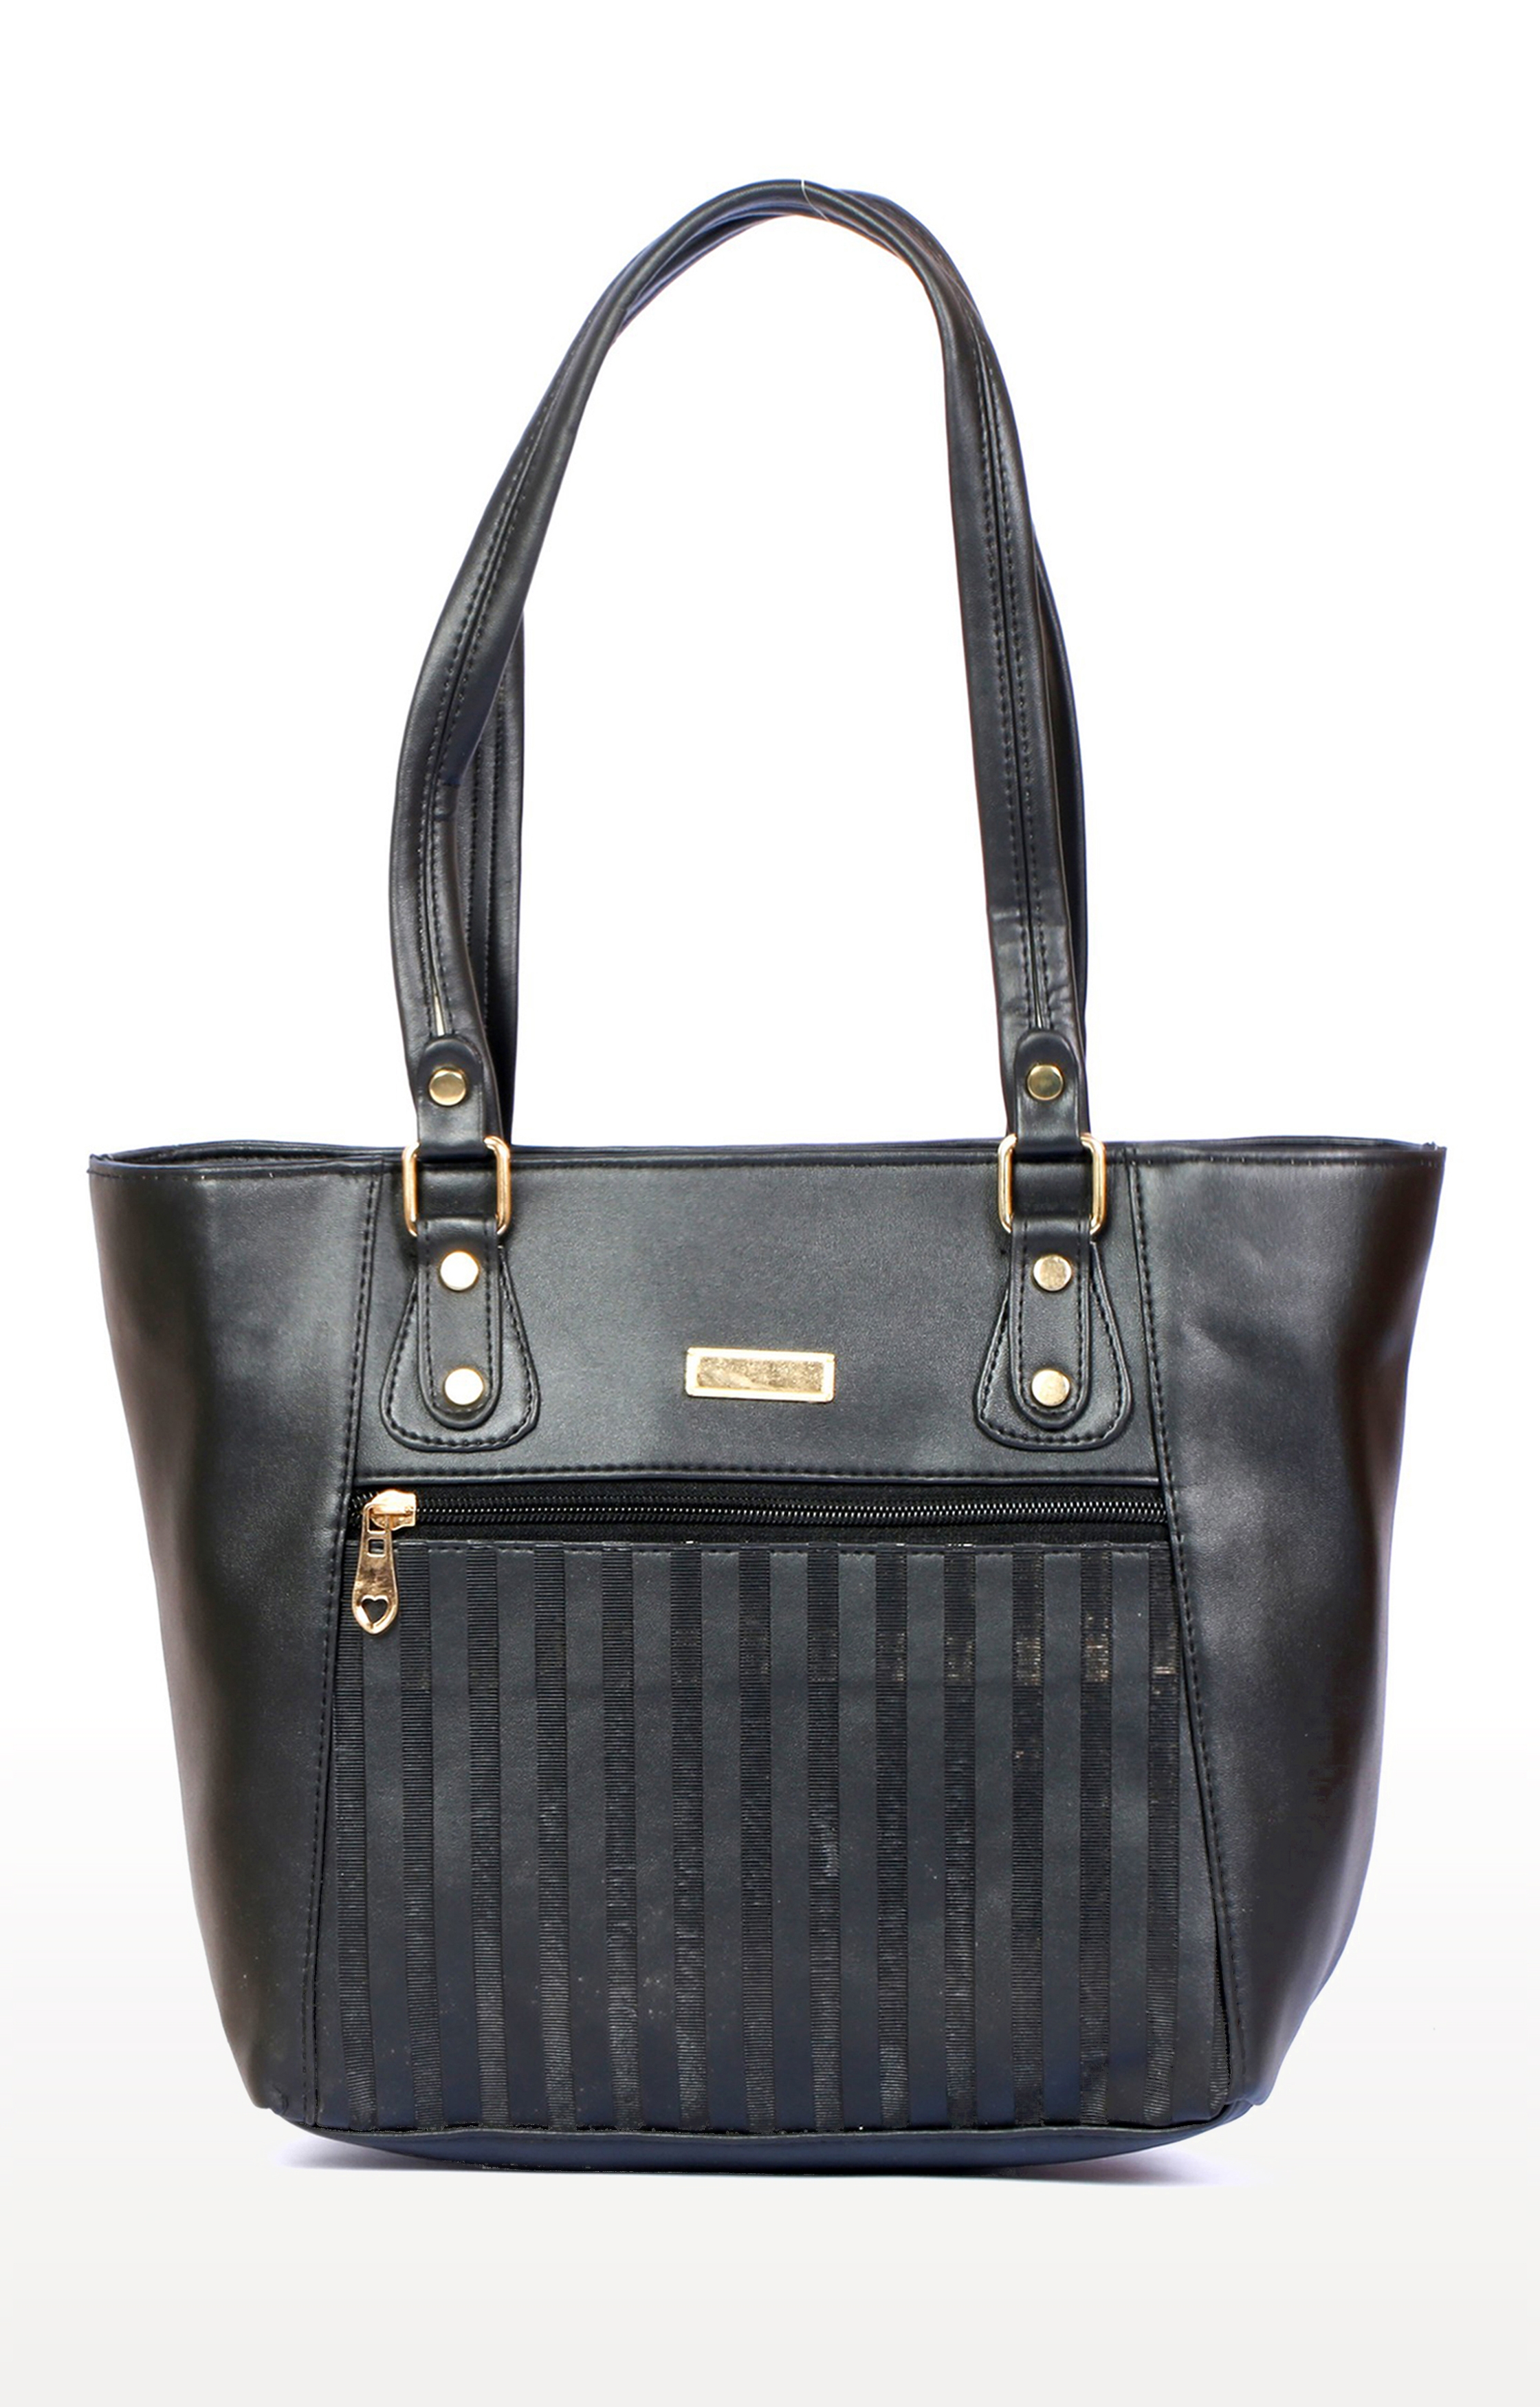 Lely's Ladies Office Handbag (Black)